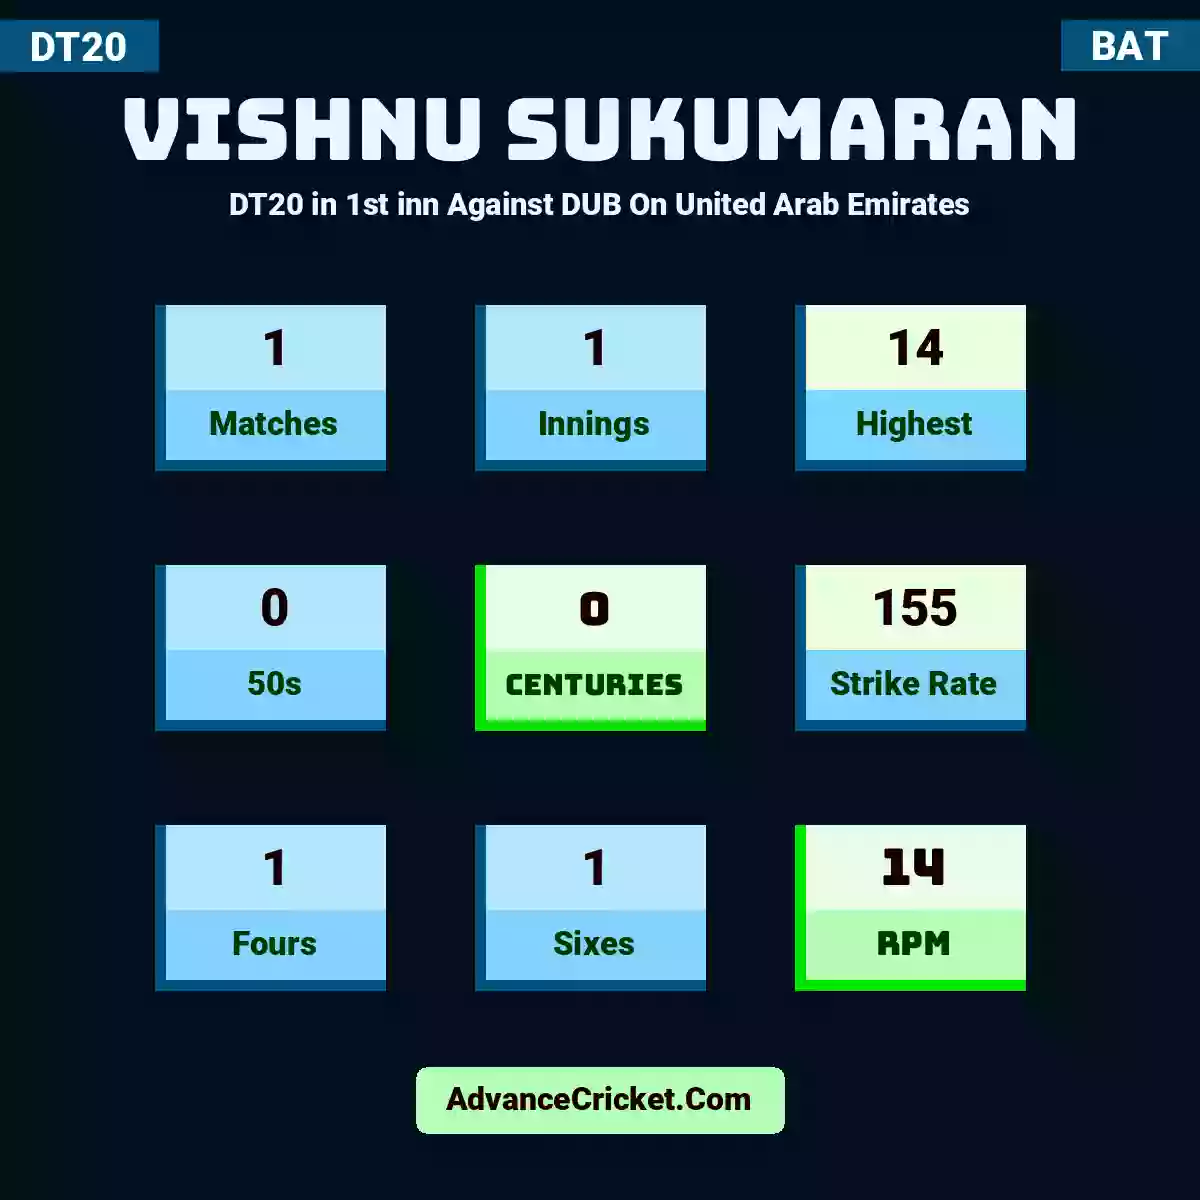 Vishnu Sukumaran DT20  in 1st inn Against DUB On United Arab Emirates, Vishnu Sukumaran played 1 matches, scored 14 runs as highest, 0 half-centuries, and 0 centuries, with a strike rate of 155. V.Sukumaran hit 1 fours and 1 sixes, with an RPM of 14.